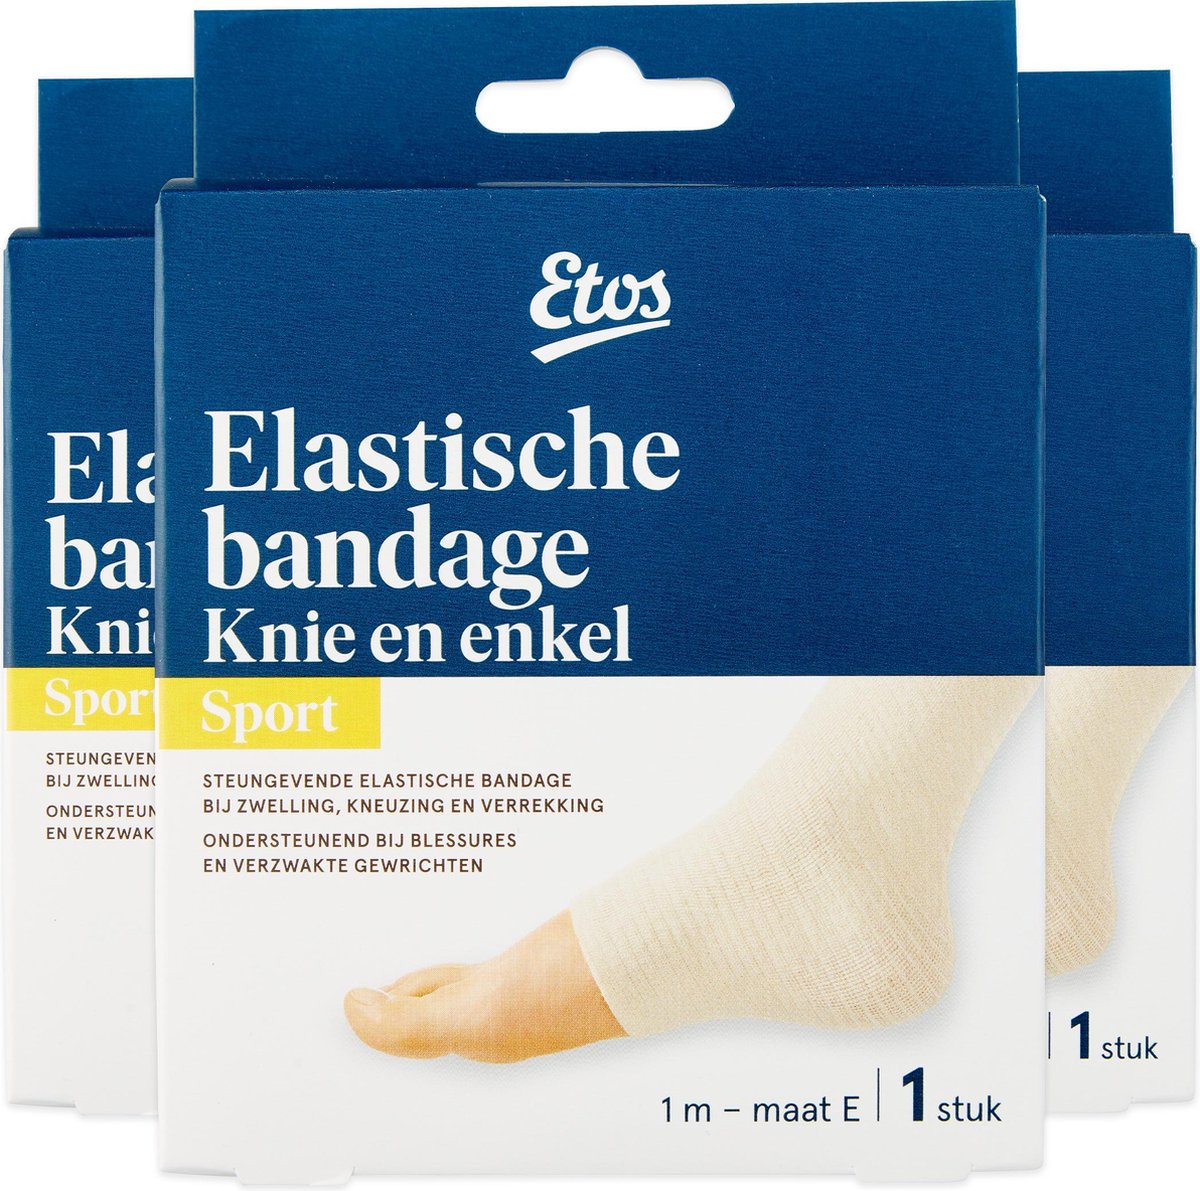 Etos Elastische bandage Knie en enkel -3 stuks